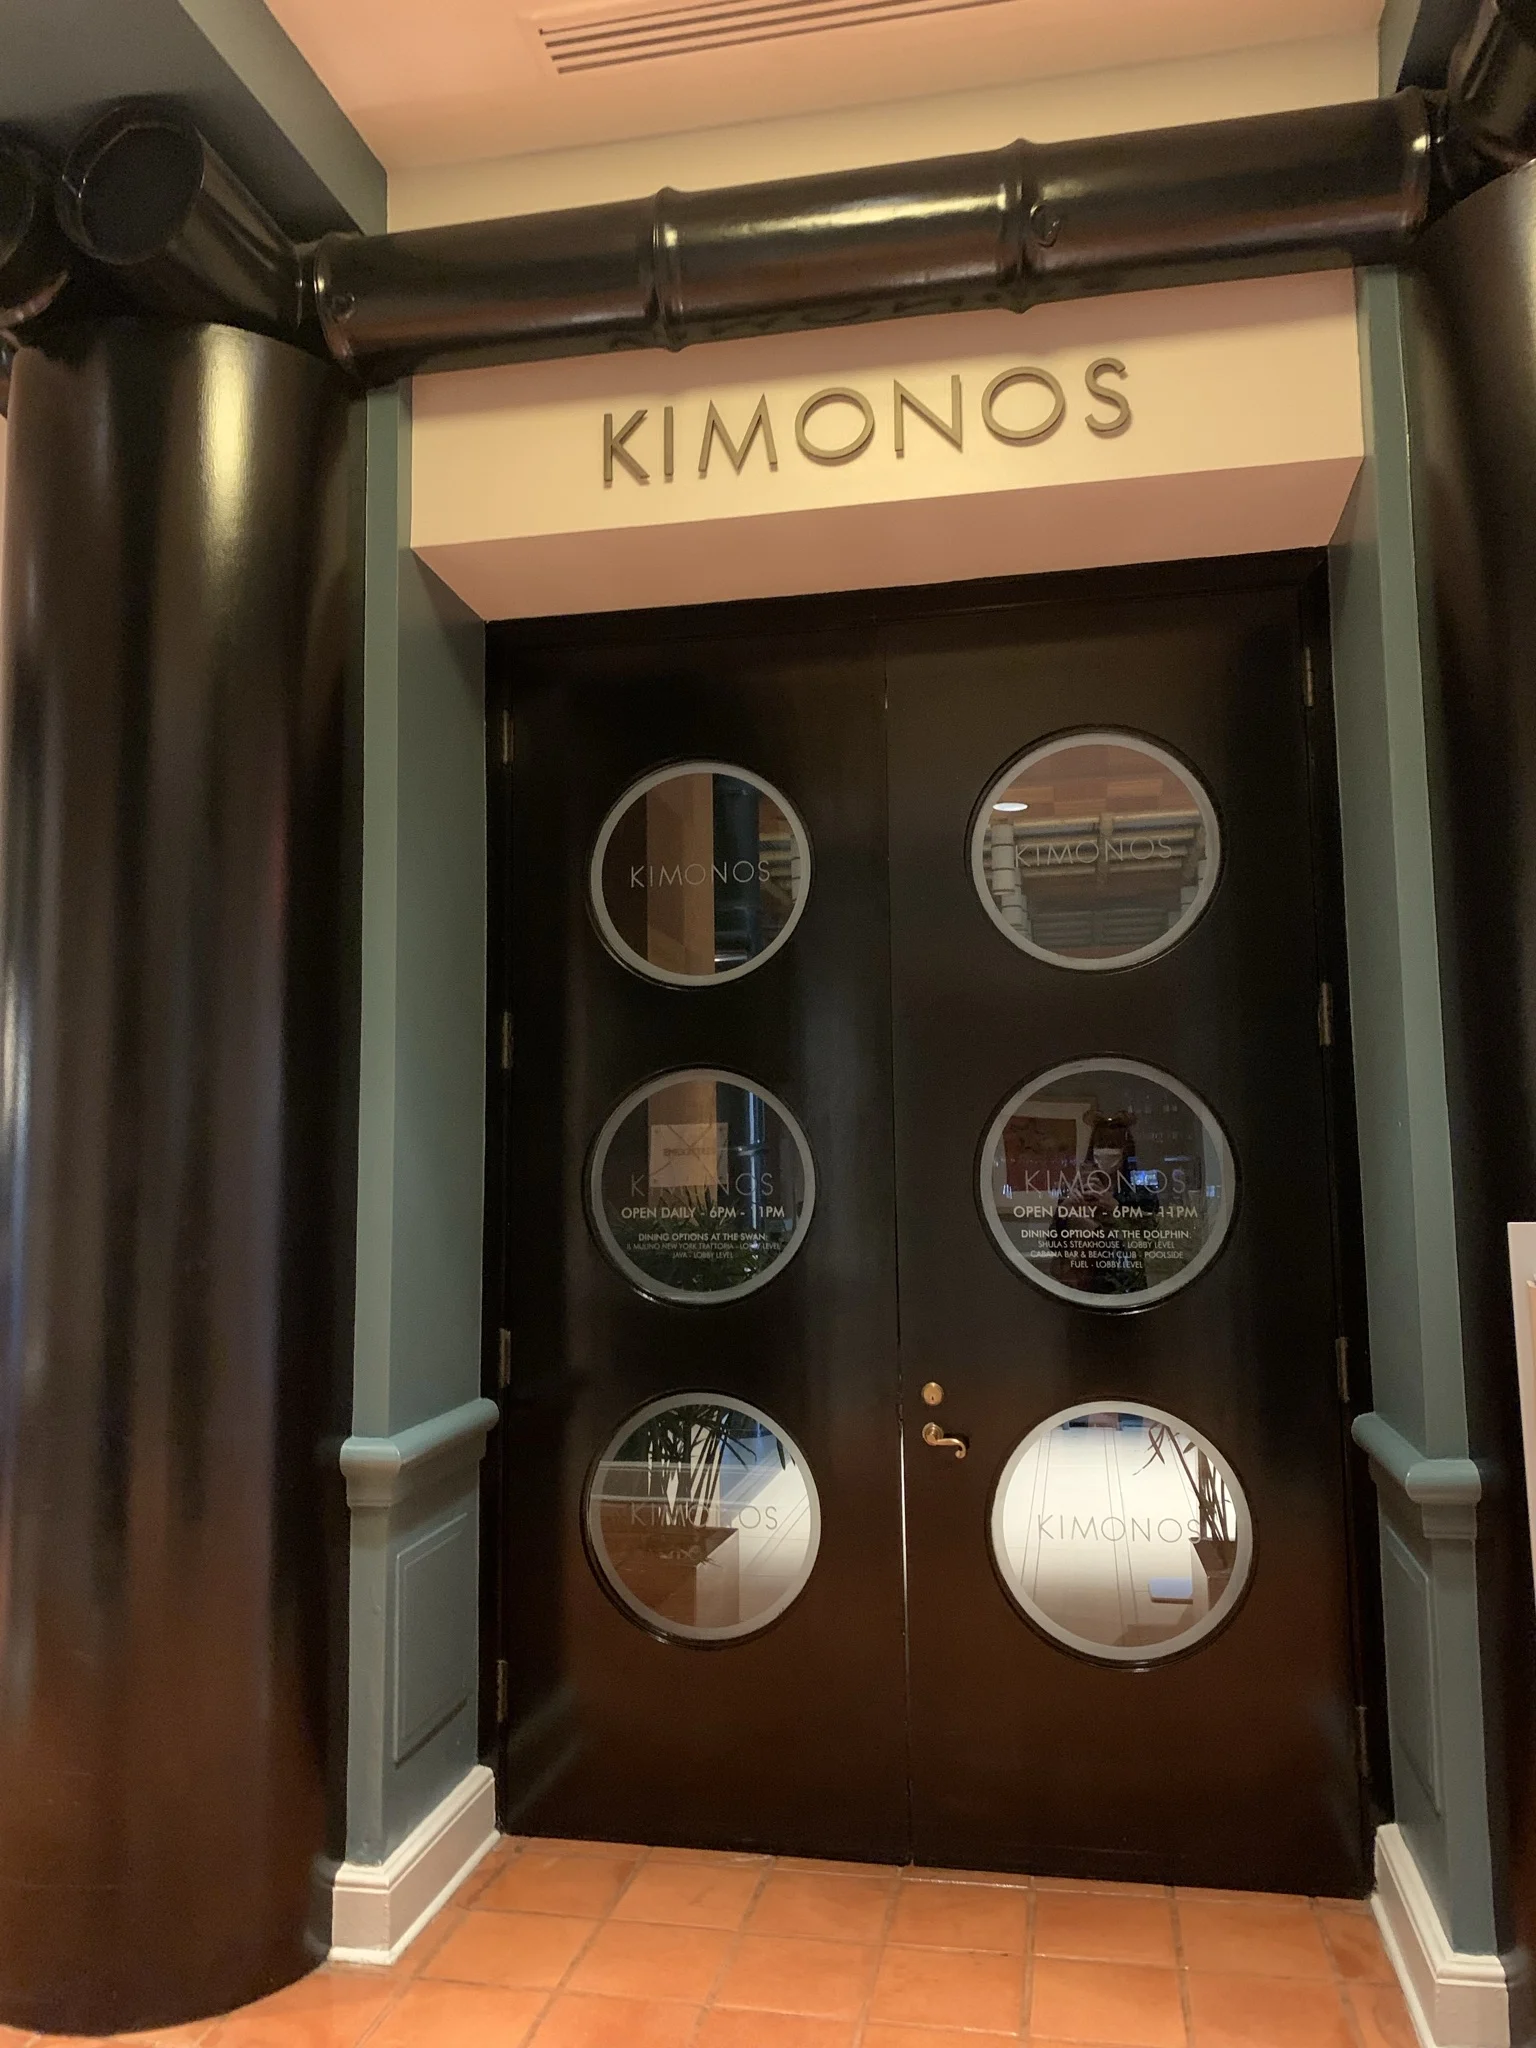 entrance to kimonos restaurant at disney swan hotel